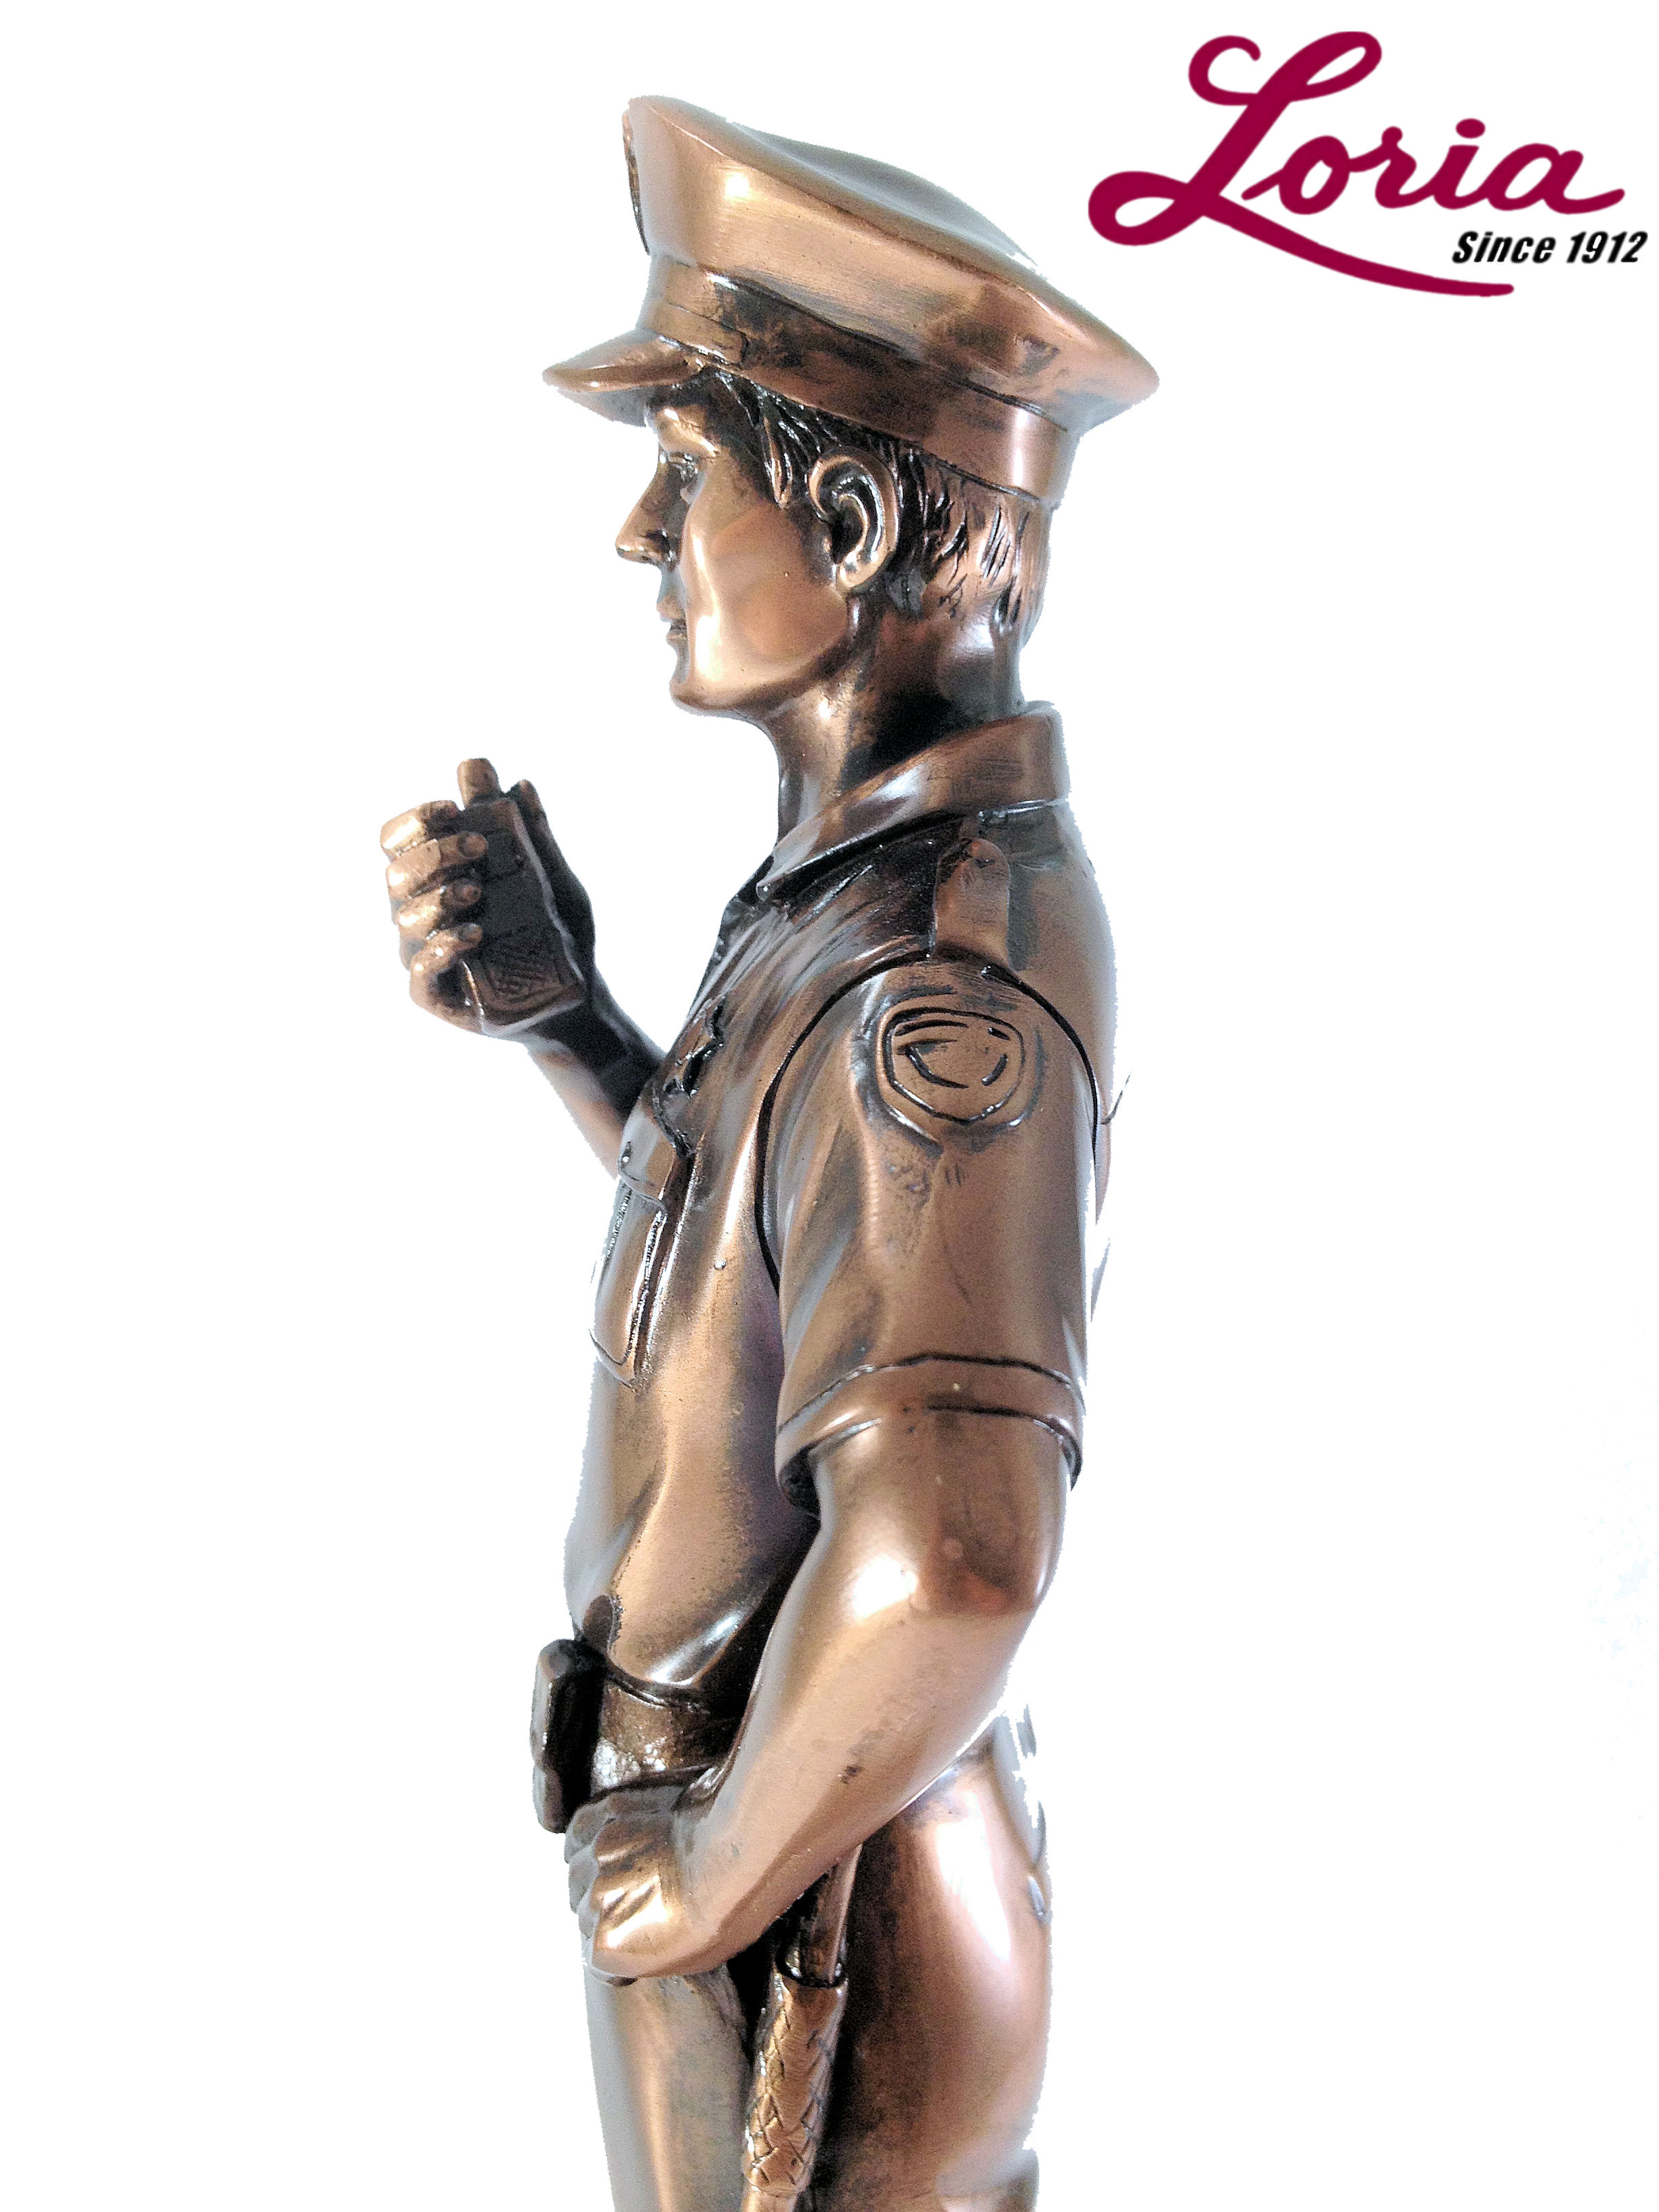 Police Officer Statue Award @ Loria Awards